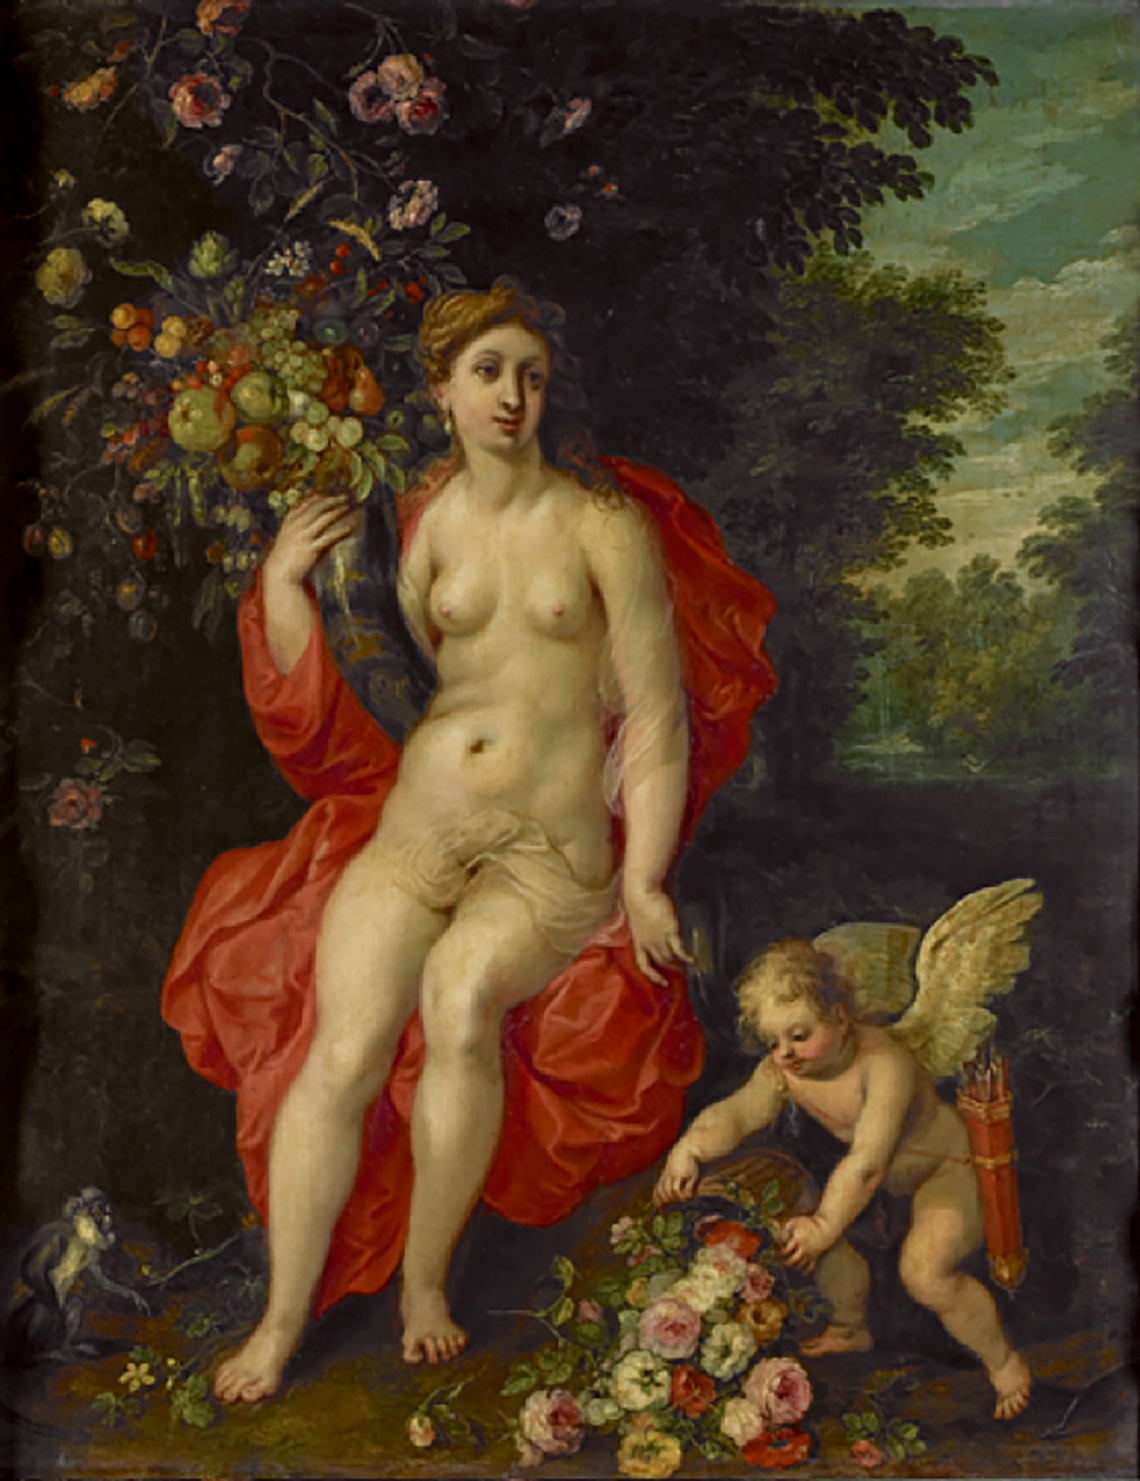 Venus and Amor as Allegory of Abundance